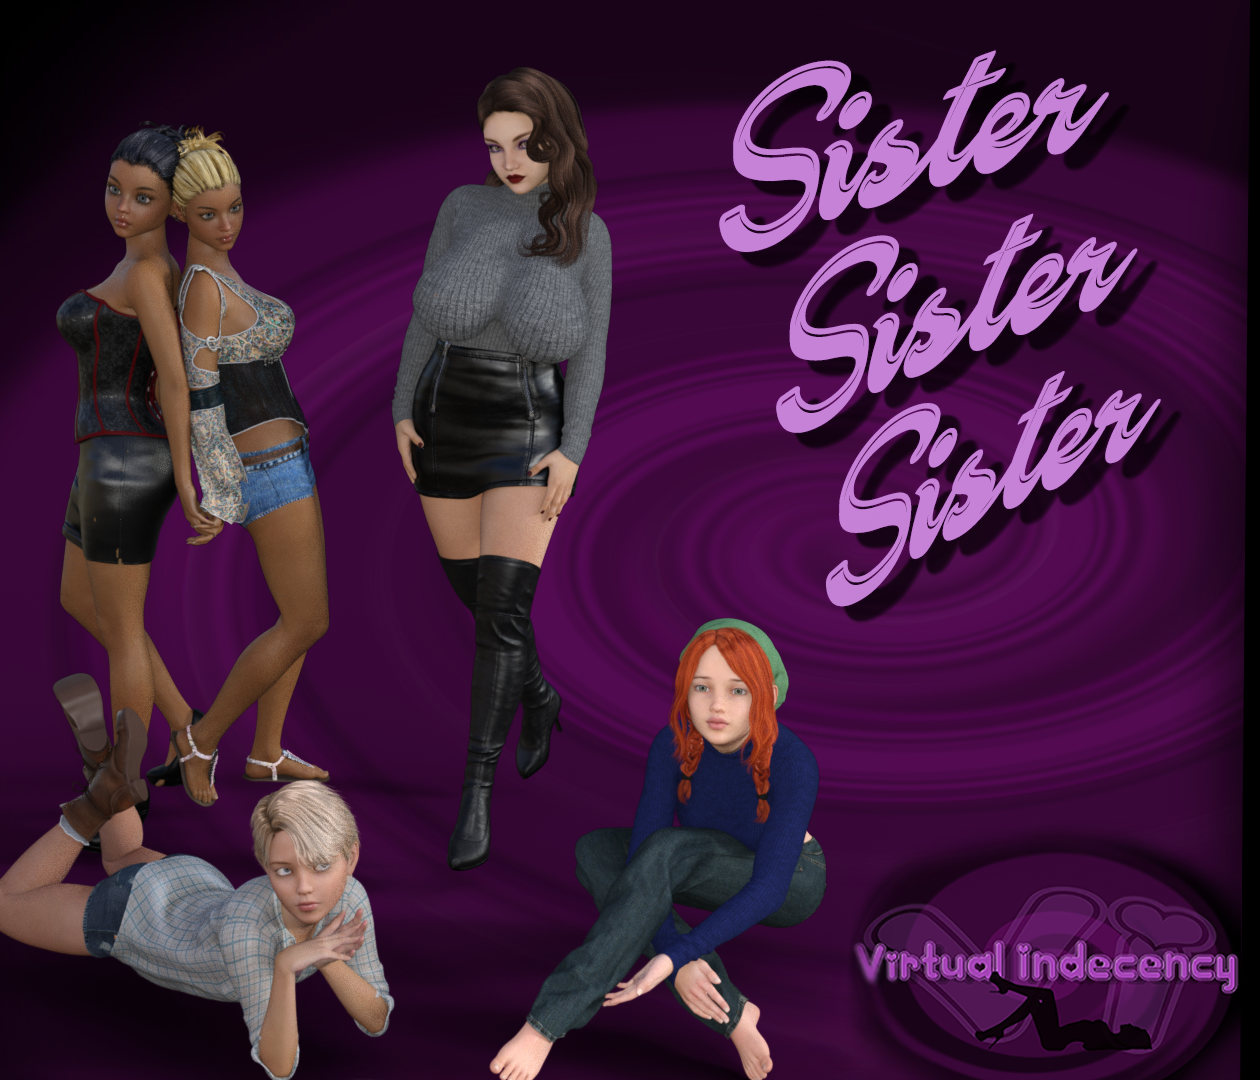 Sister, Sister, Sister Chapter 15 SE Completed+Walkthrough by Virtual indecency Porn Game